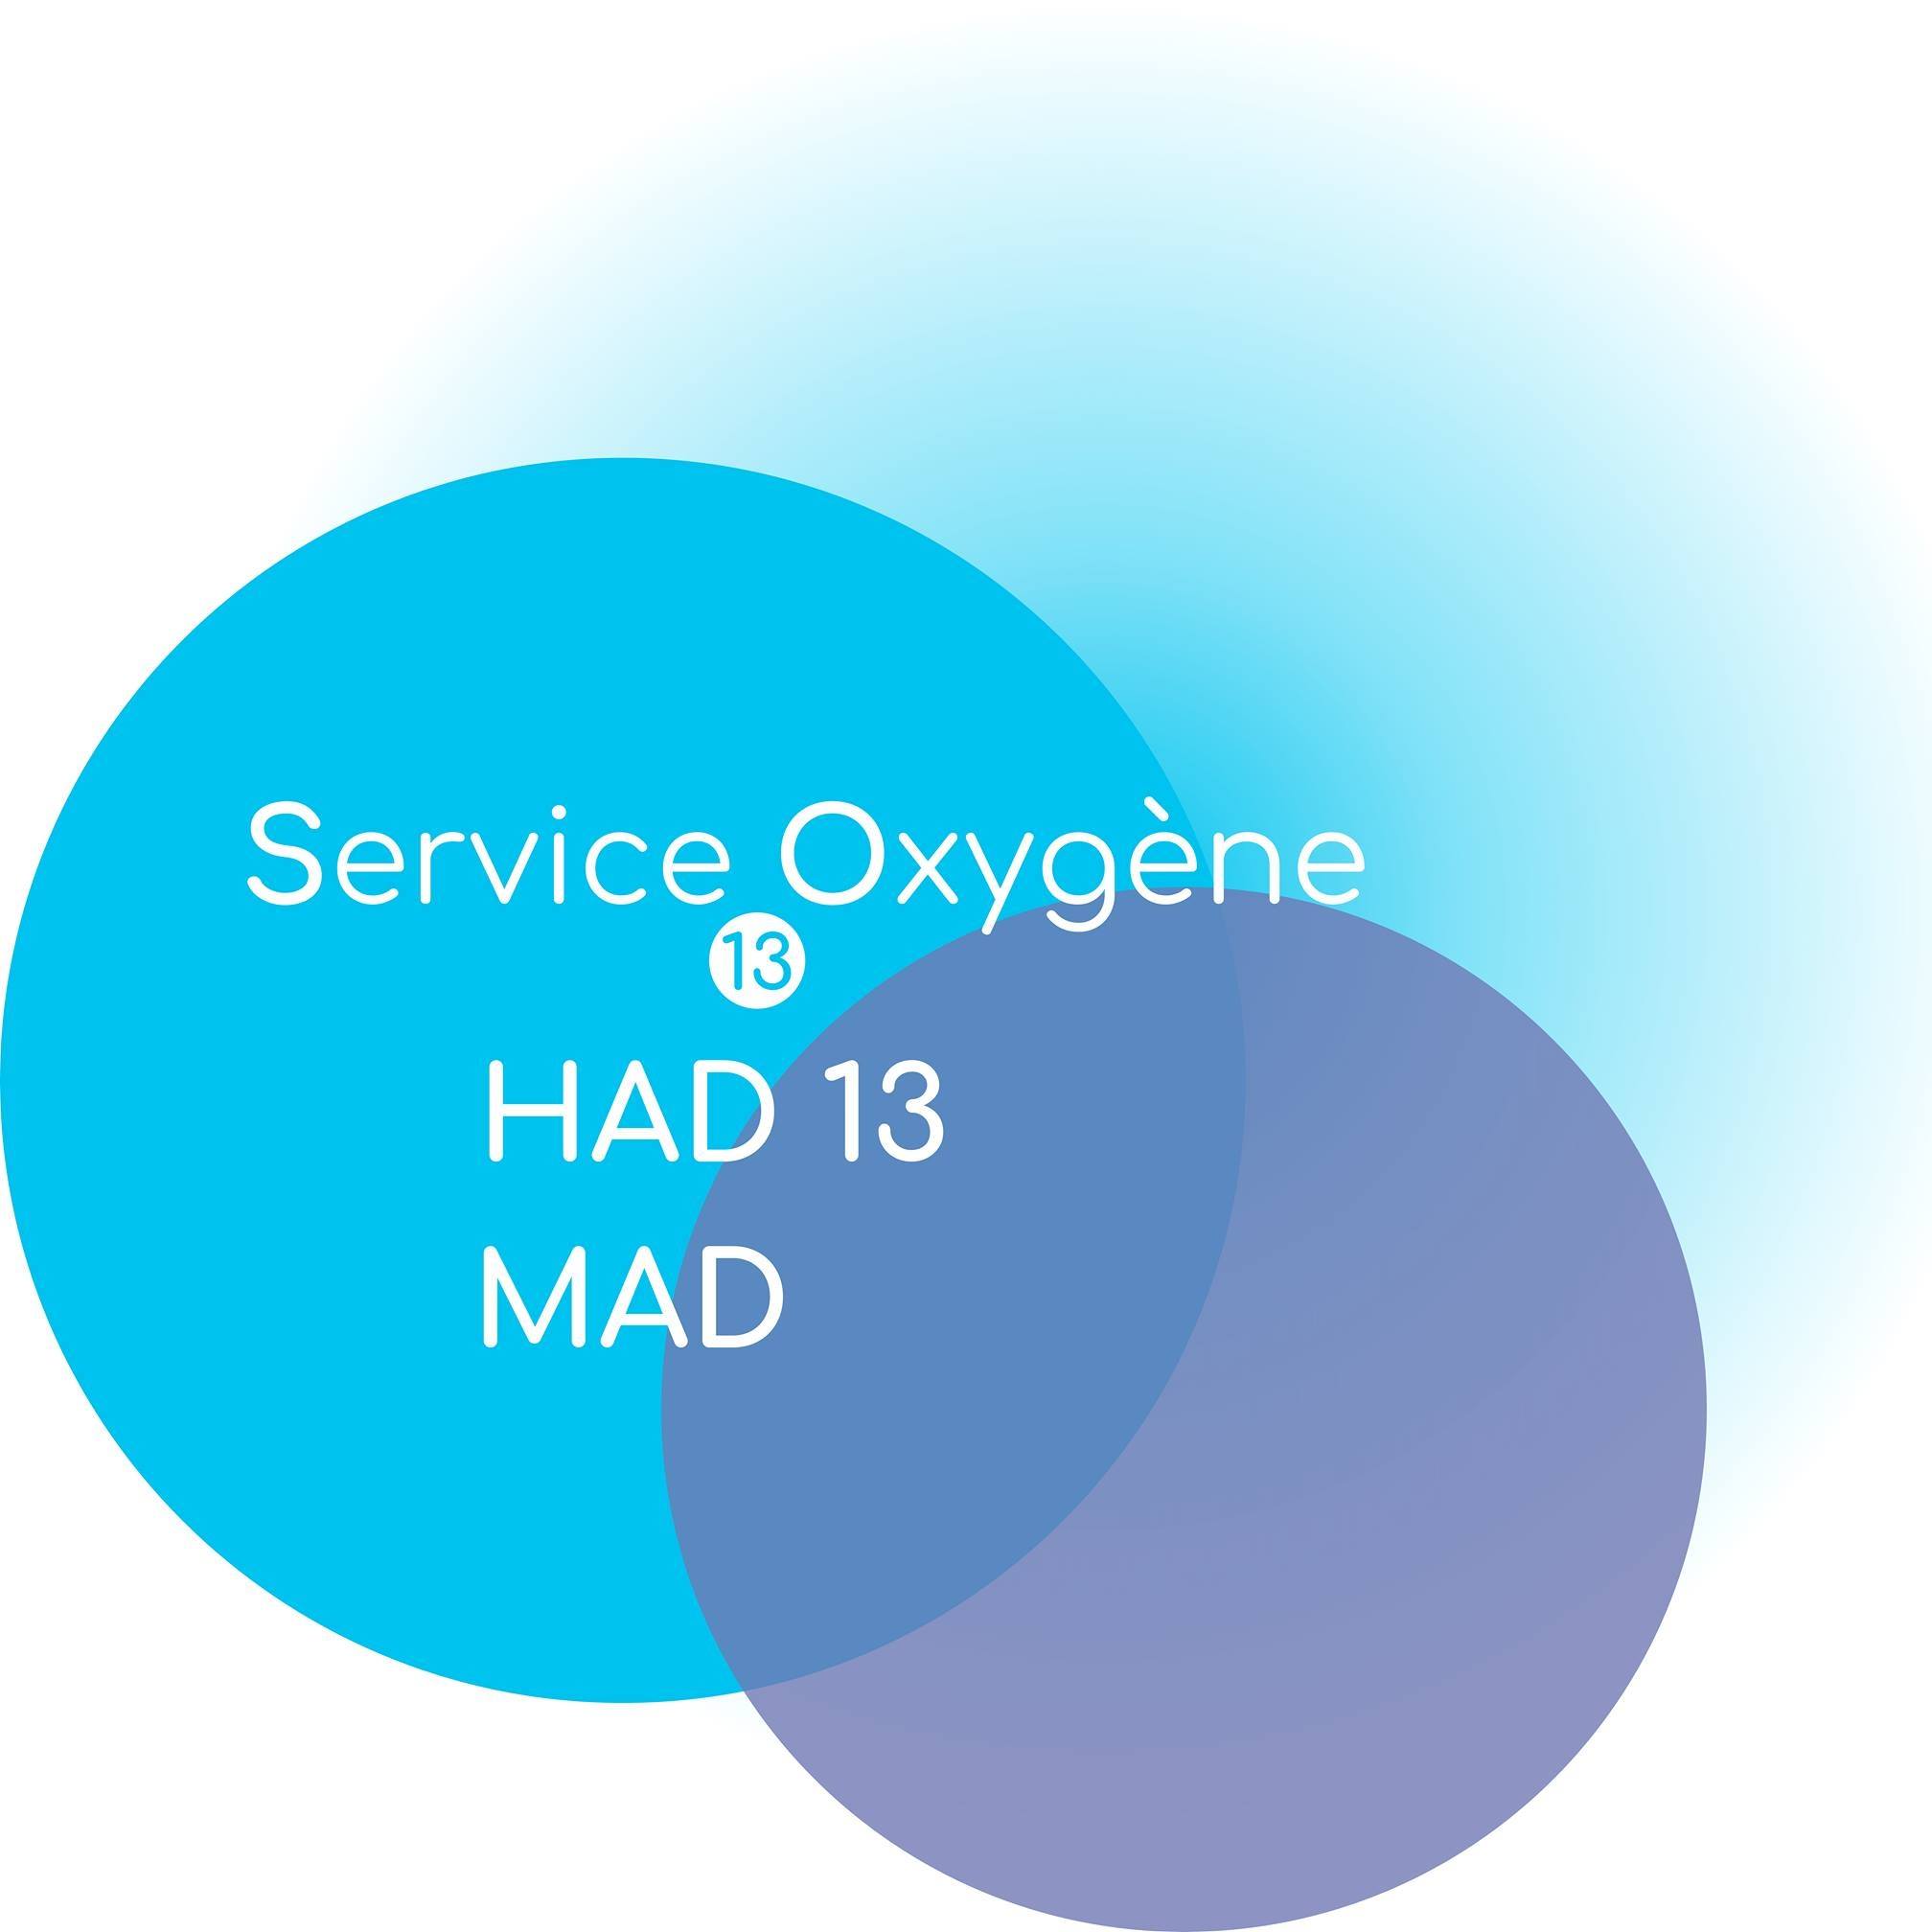 Service Oxygene